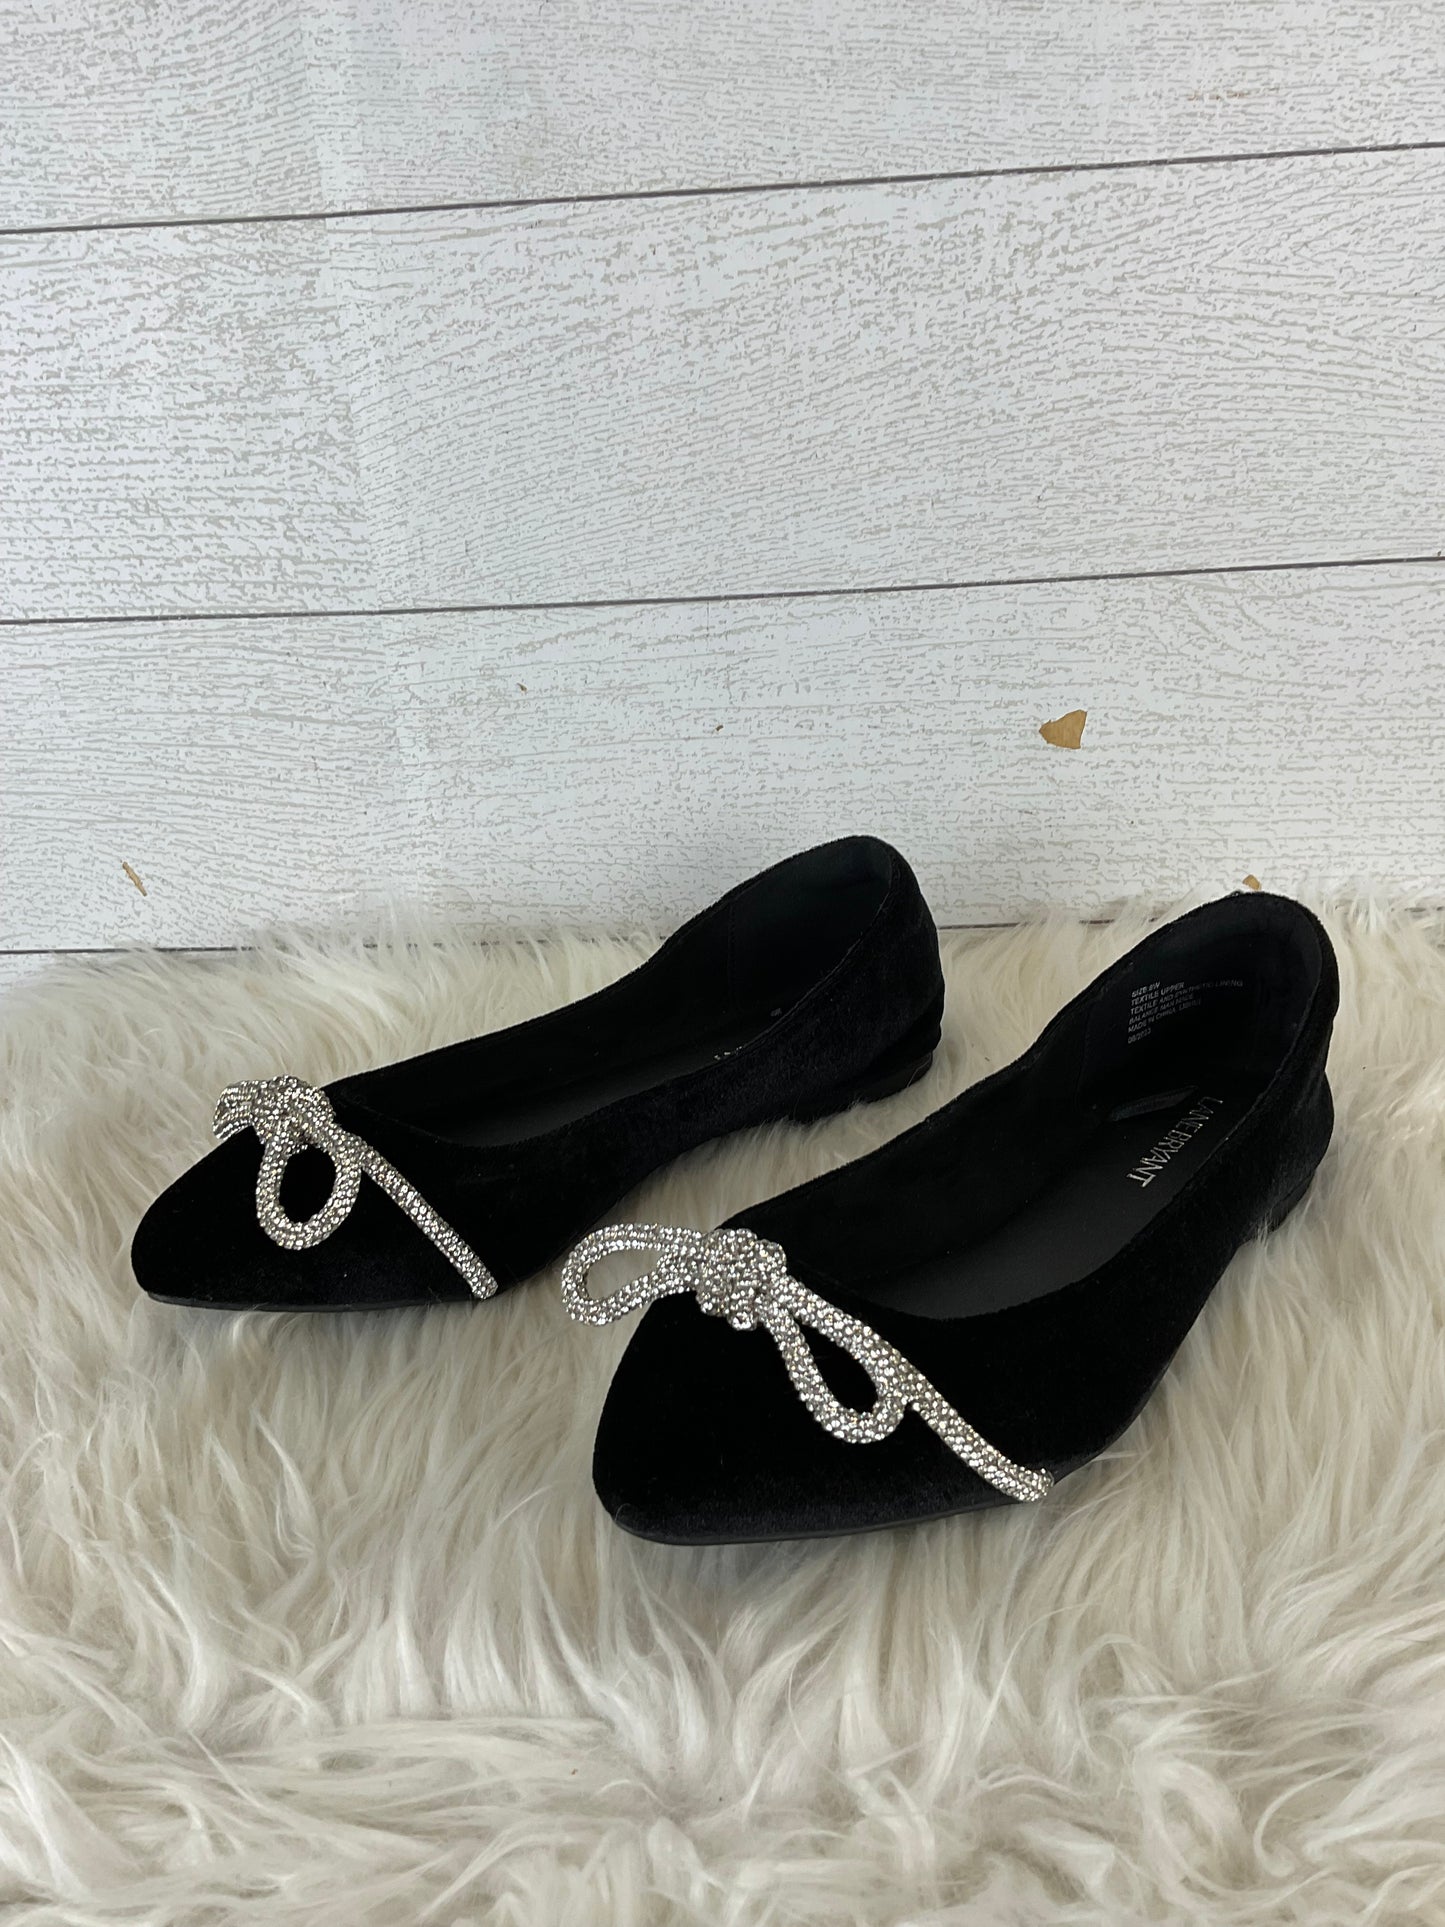 Shoes Flats Ballet By Lane Bryant  Size: 8